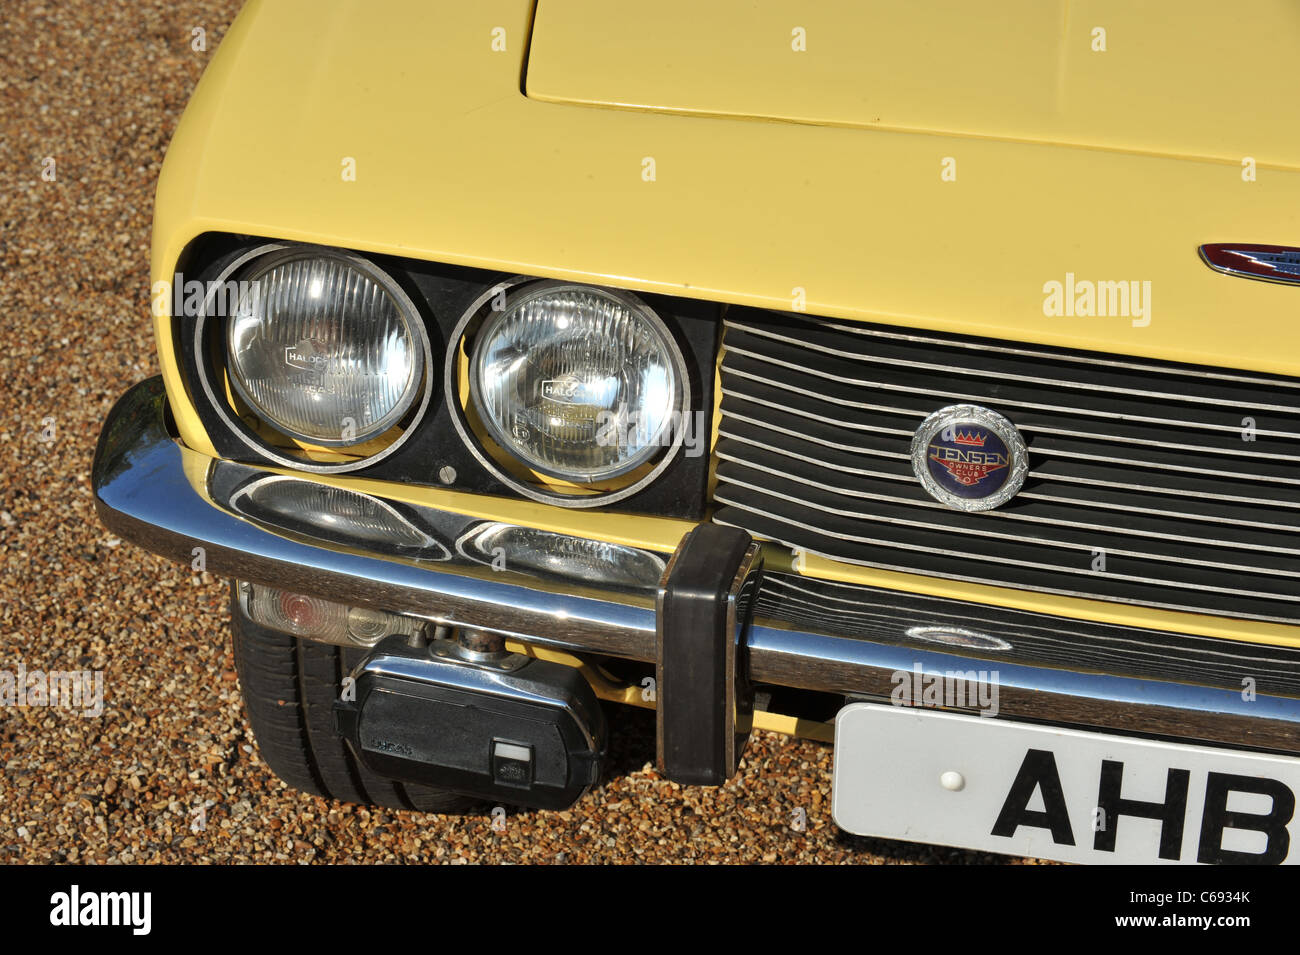 1974 Jensen Interceptor 3 2 türige britischen Sportwagen in gelb Stockfoto